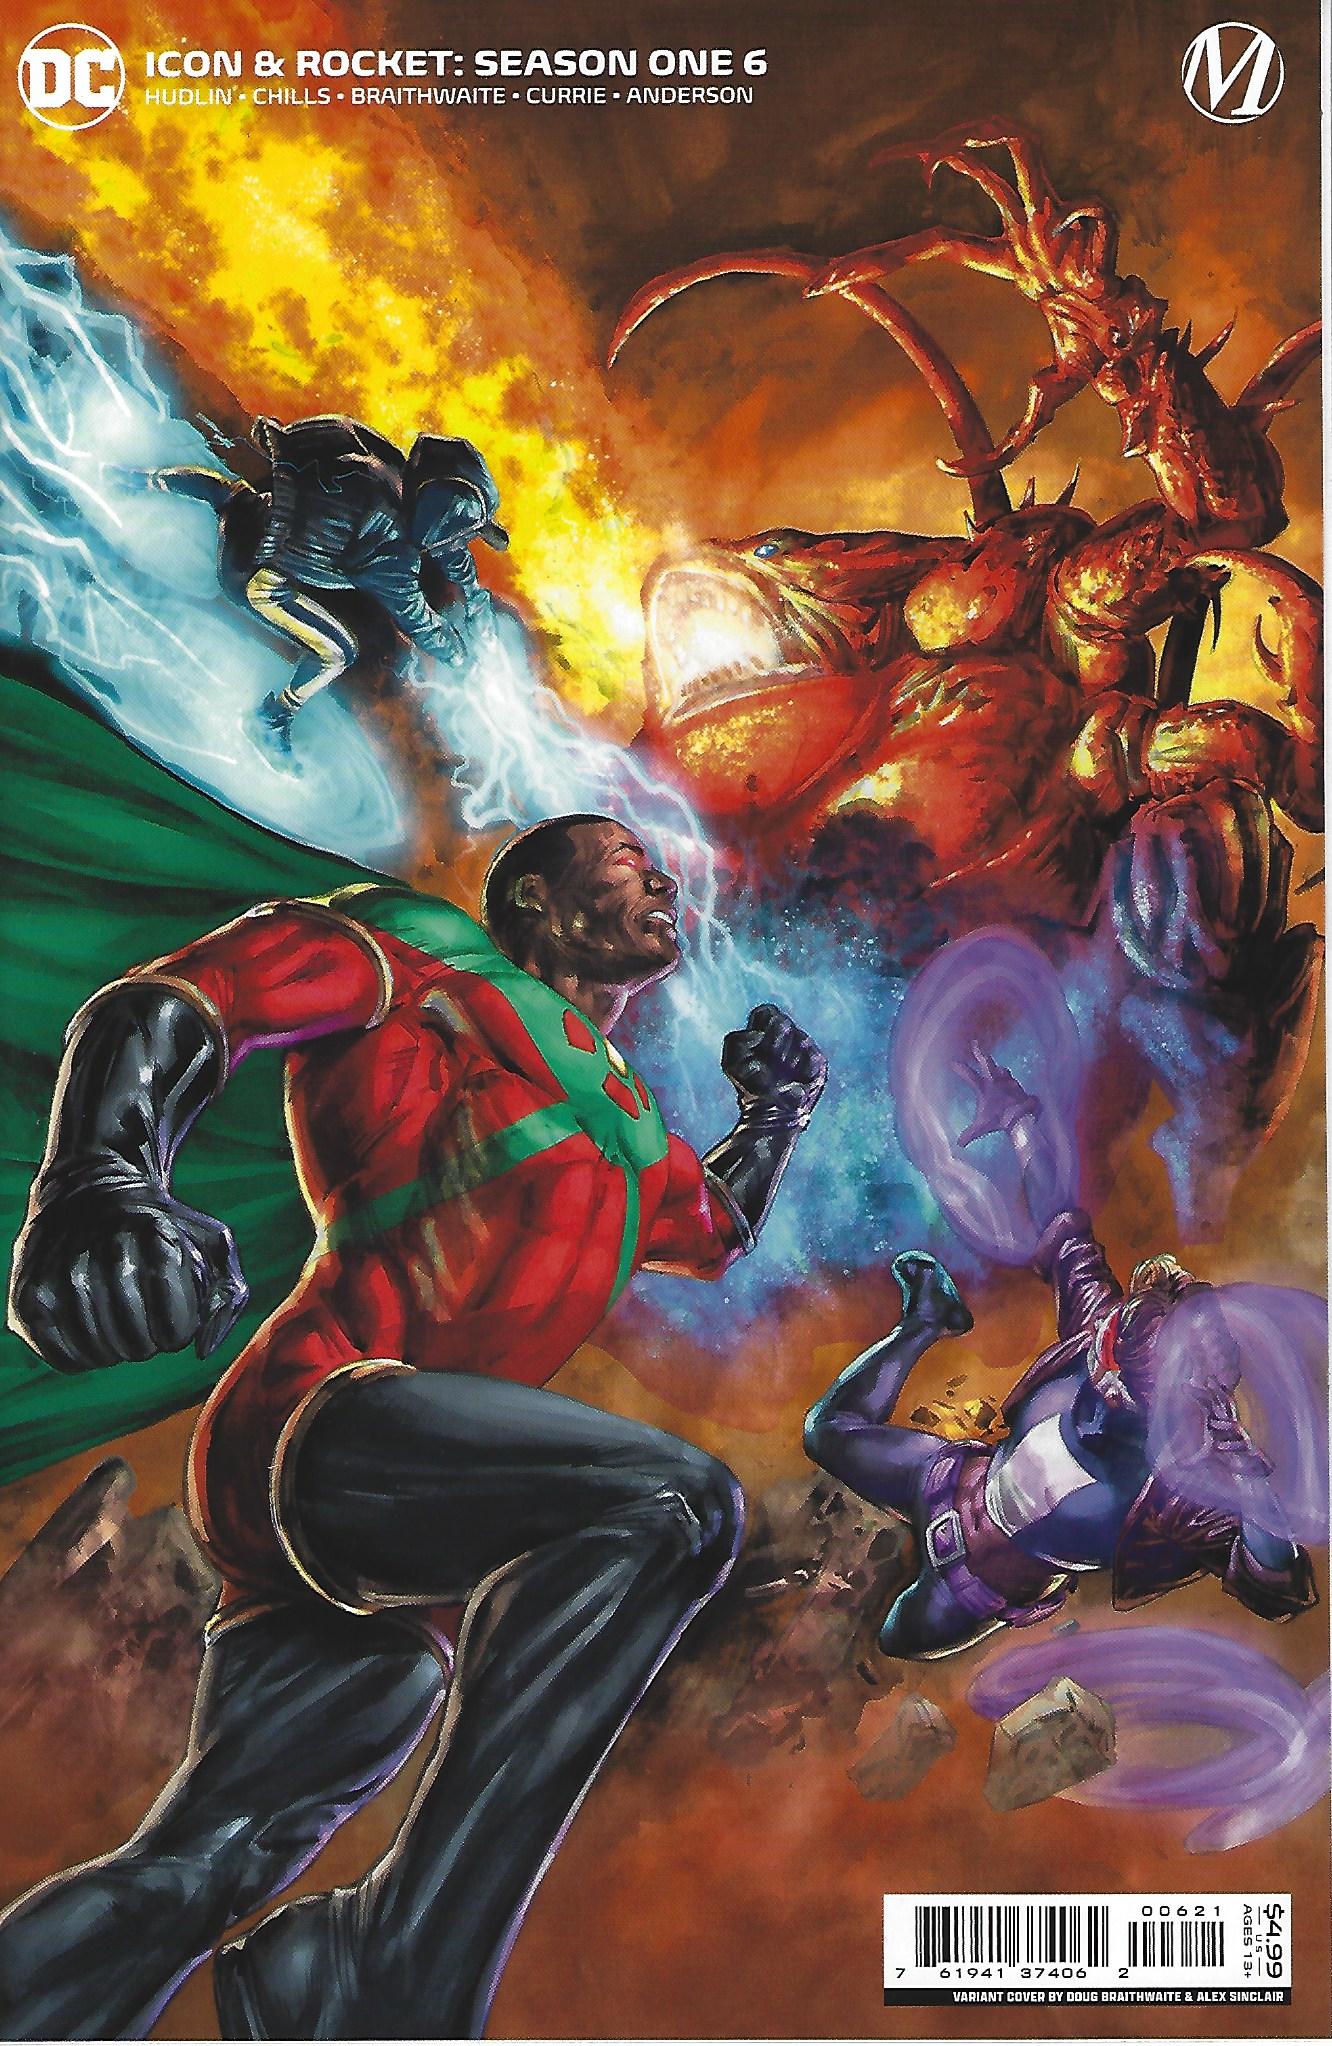 DC & Milestone Comics - Icon & Rocket Season One #6 - Variant Cover B